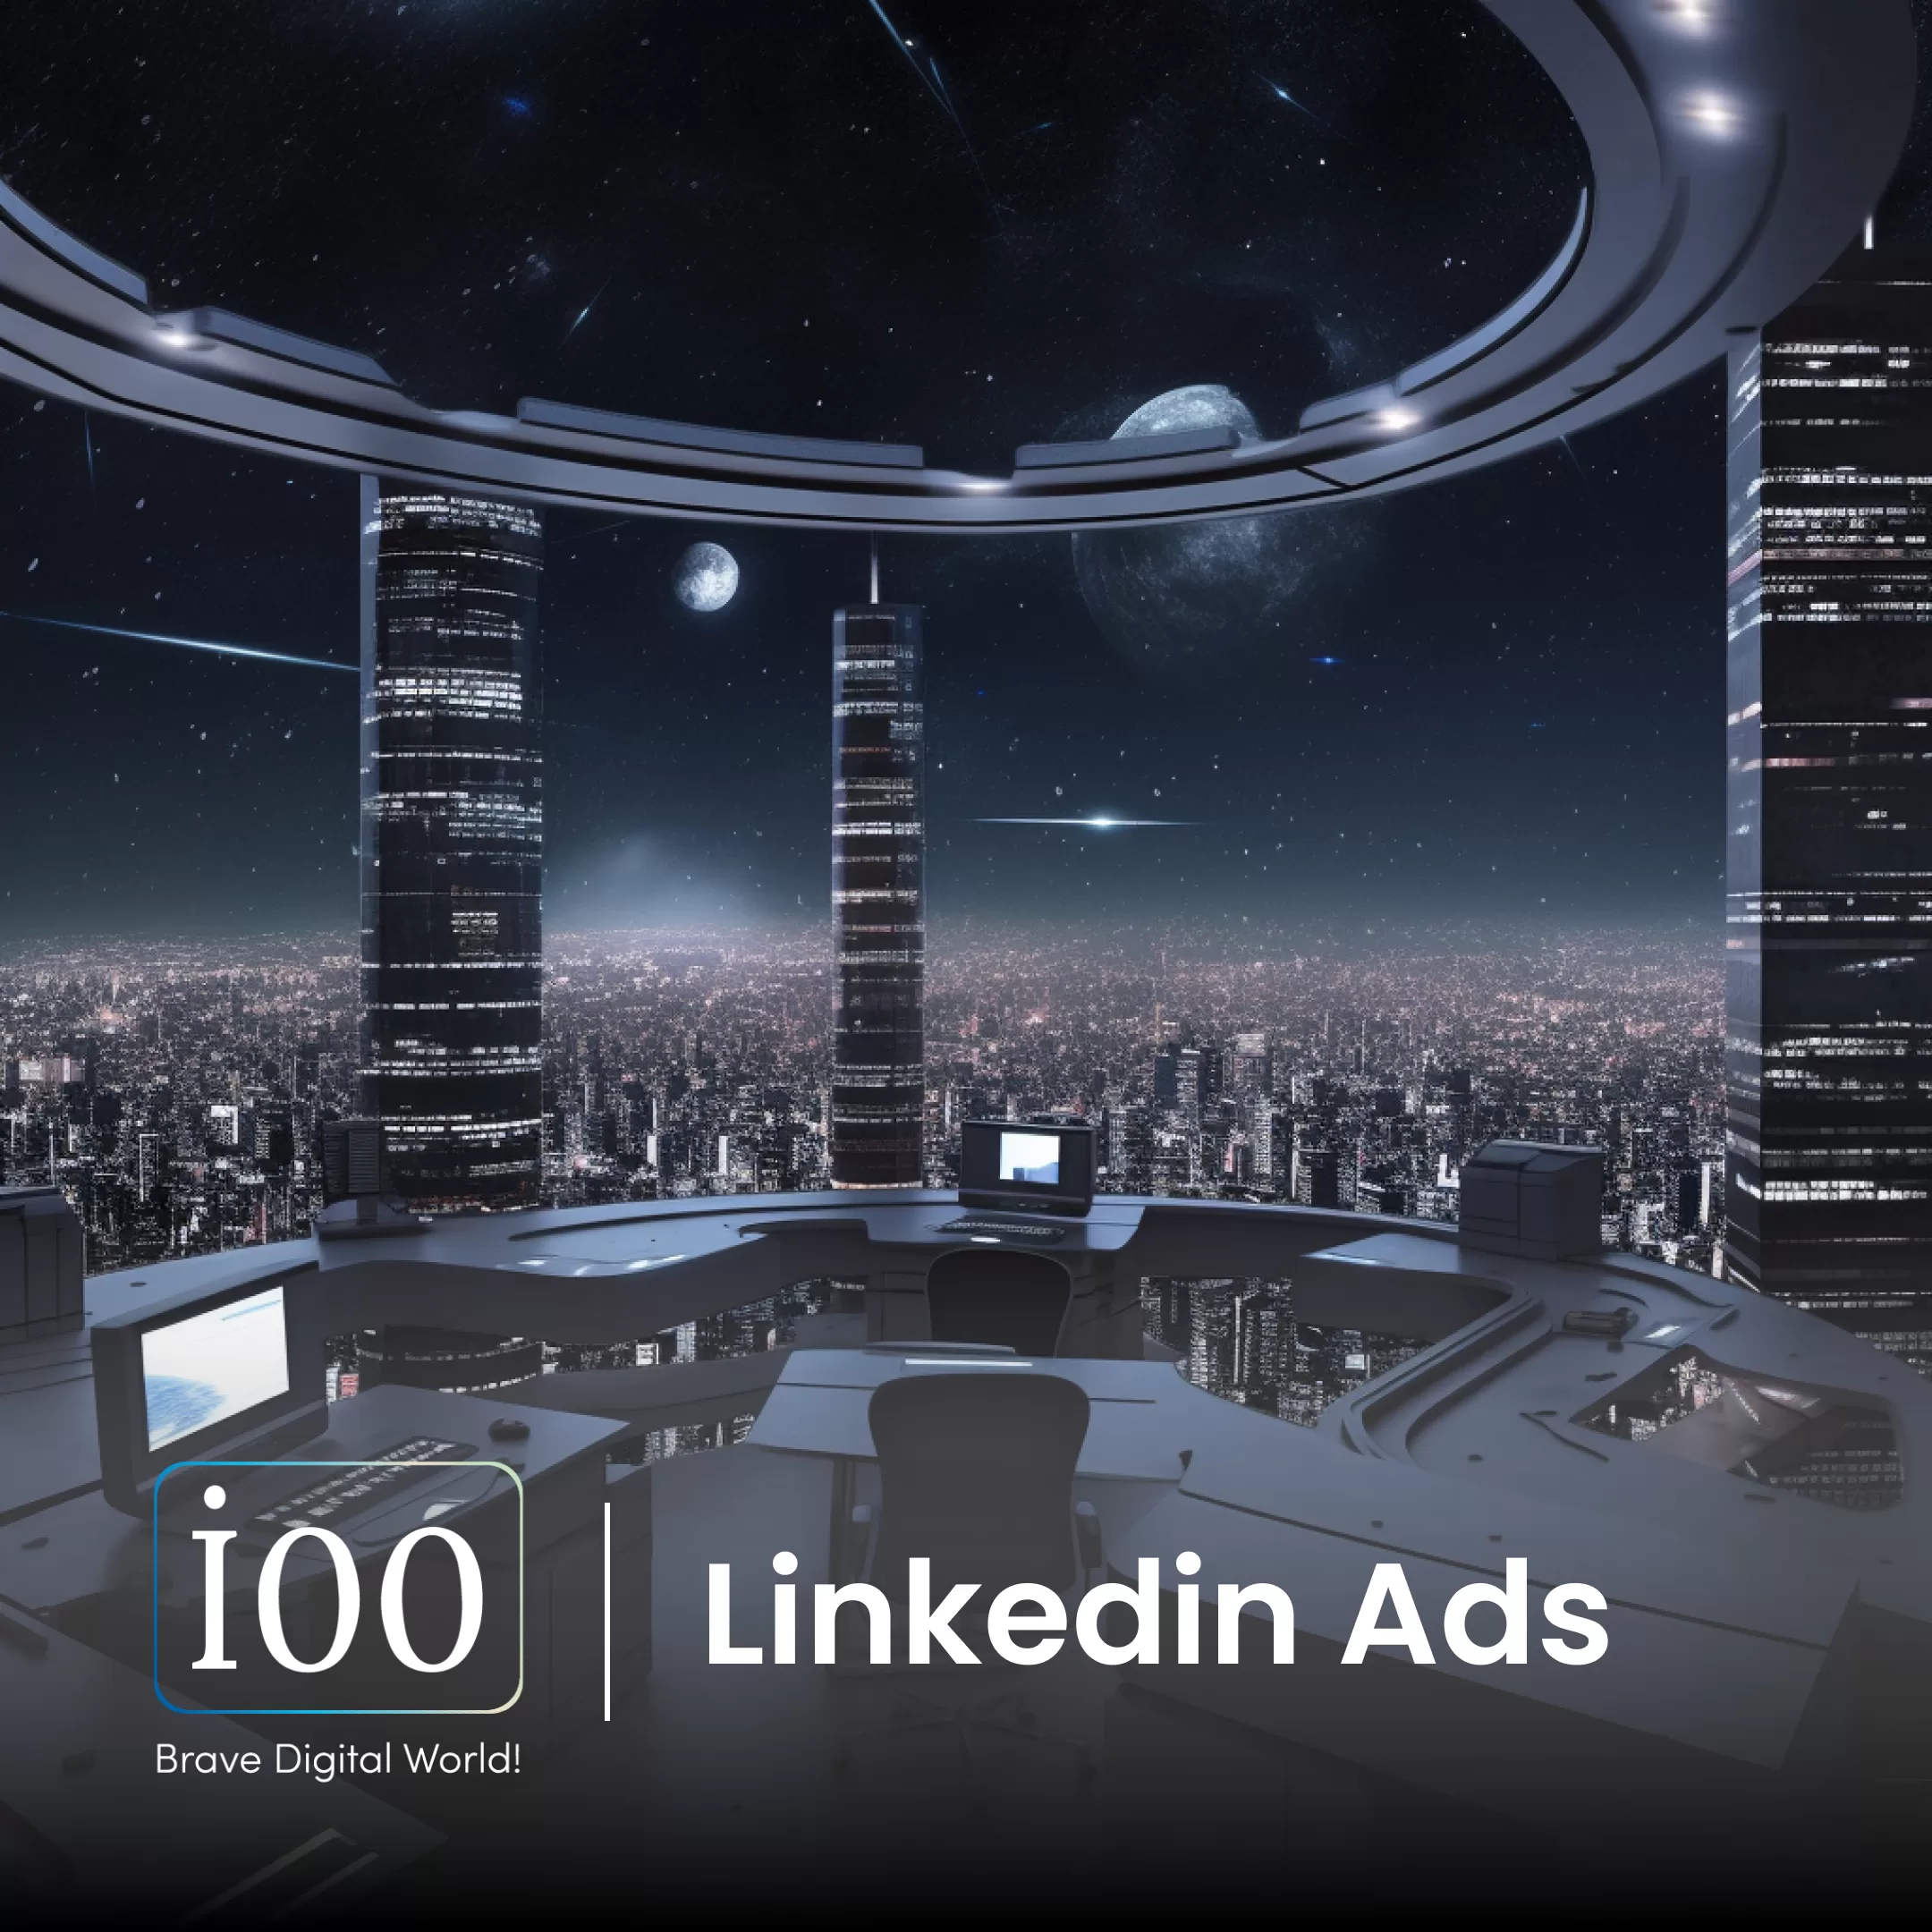 Linkedin Ads Management - i00